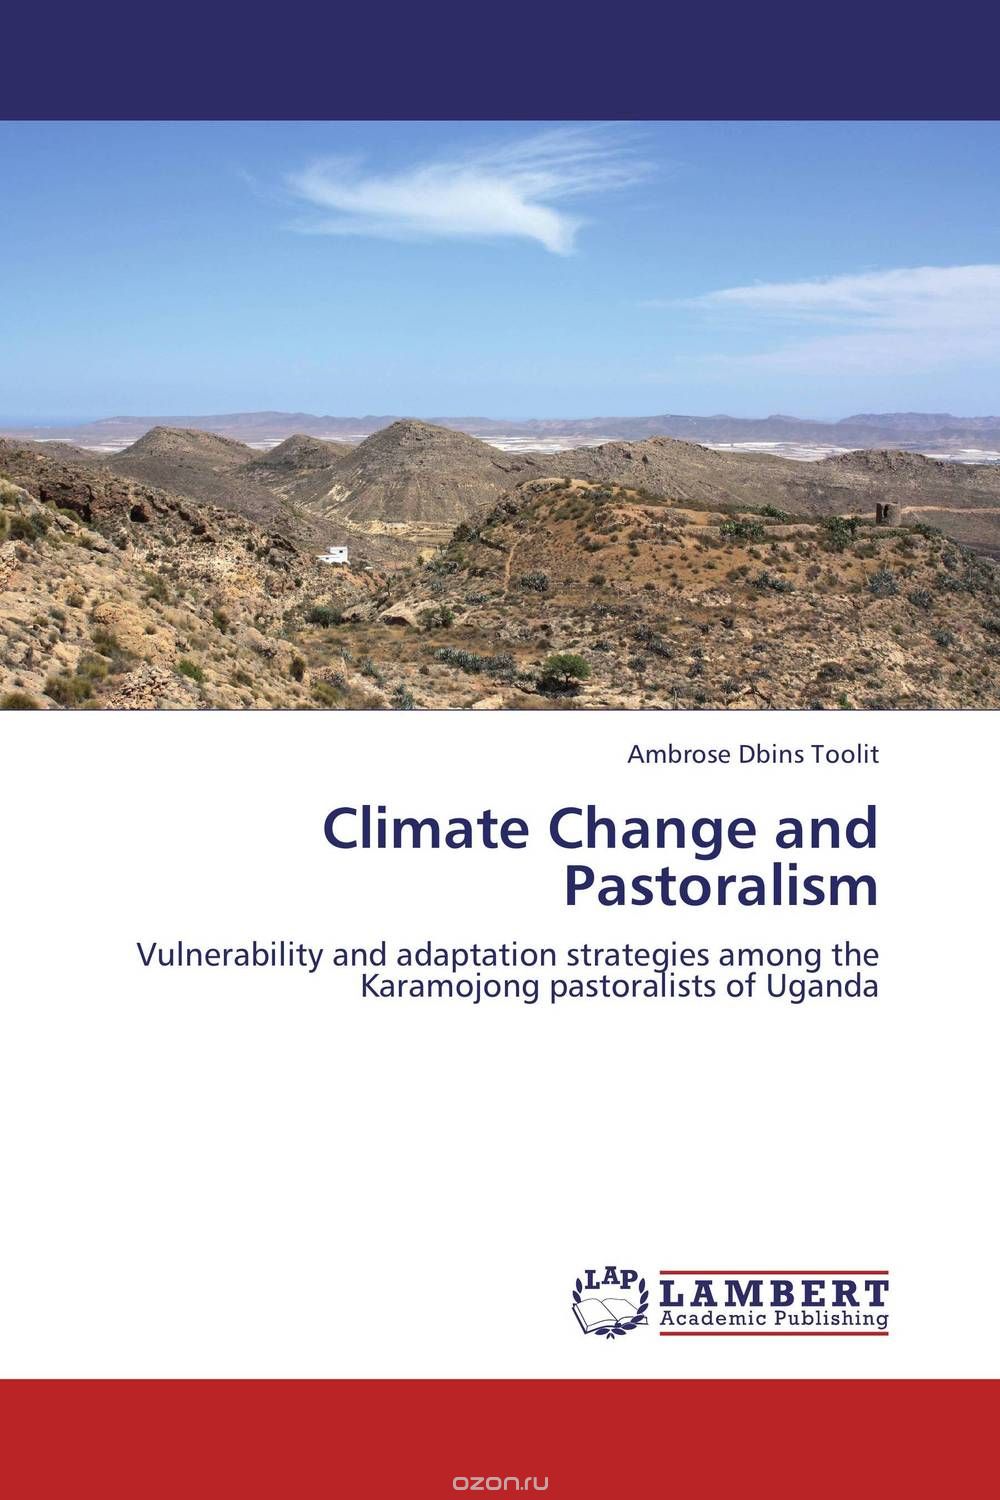 Скачать книгу "Climate Change and Pastoralism"